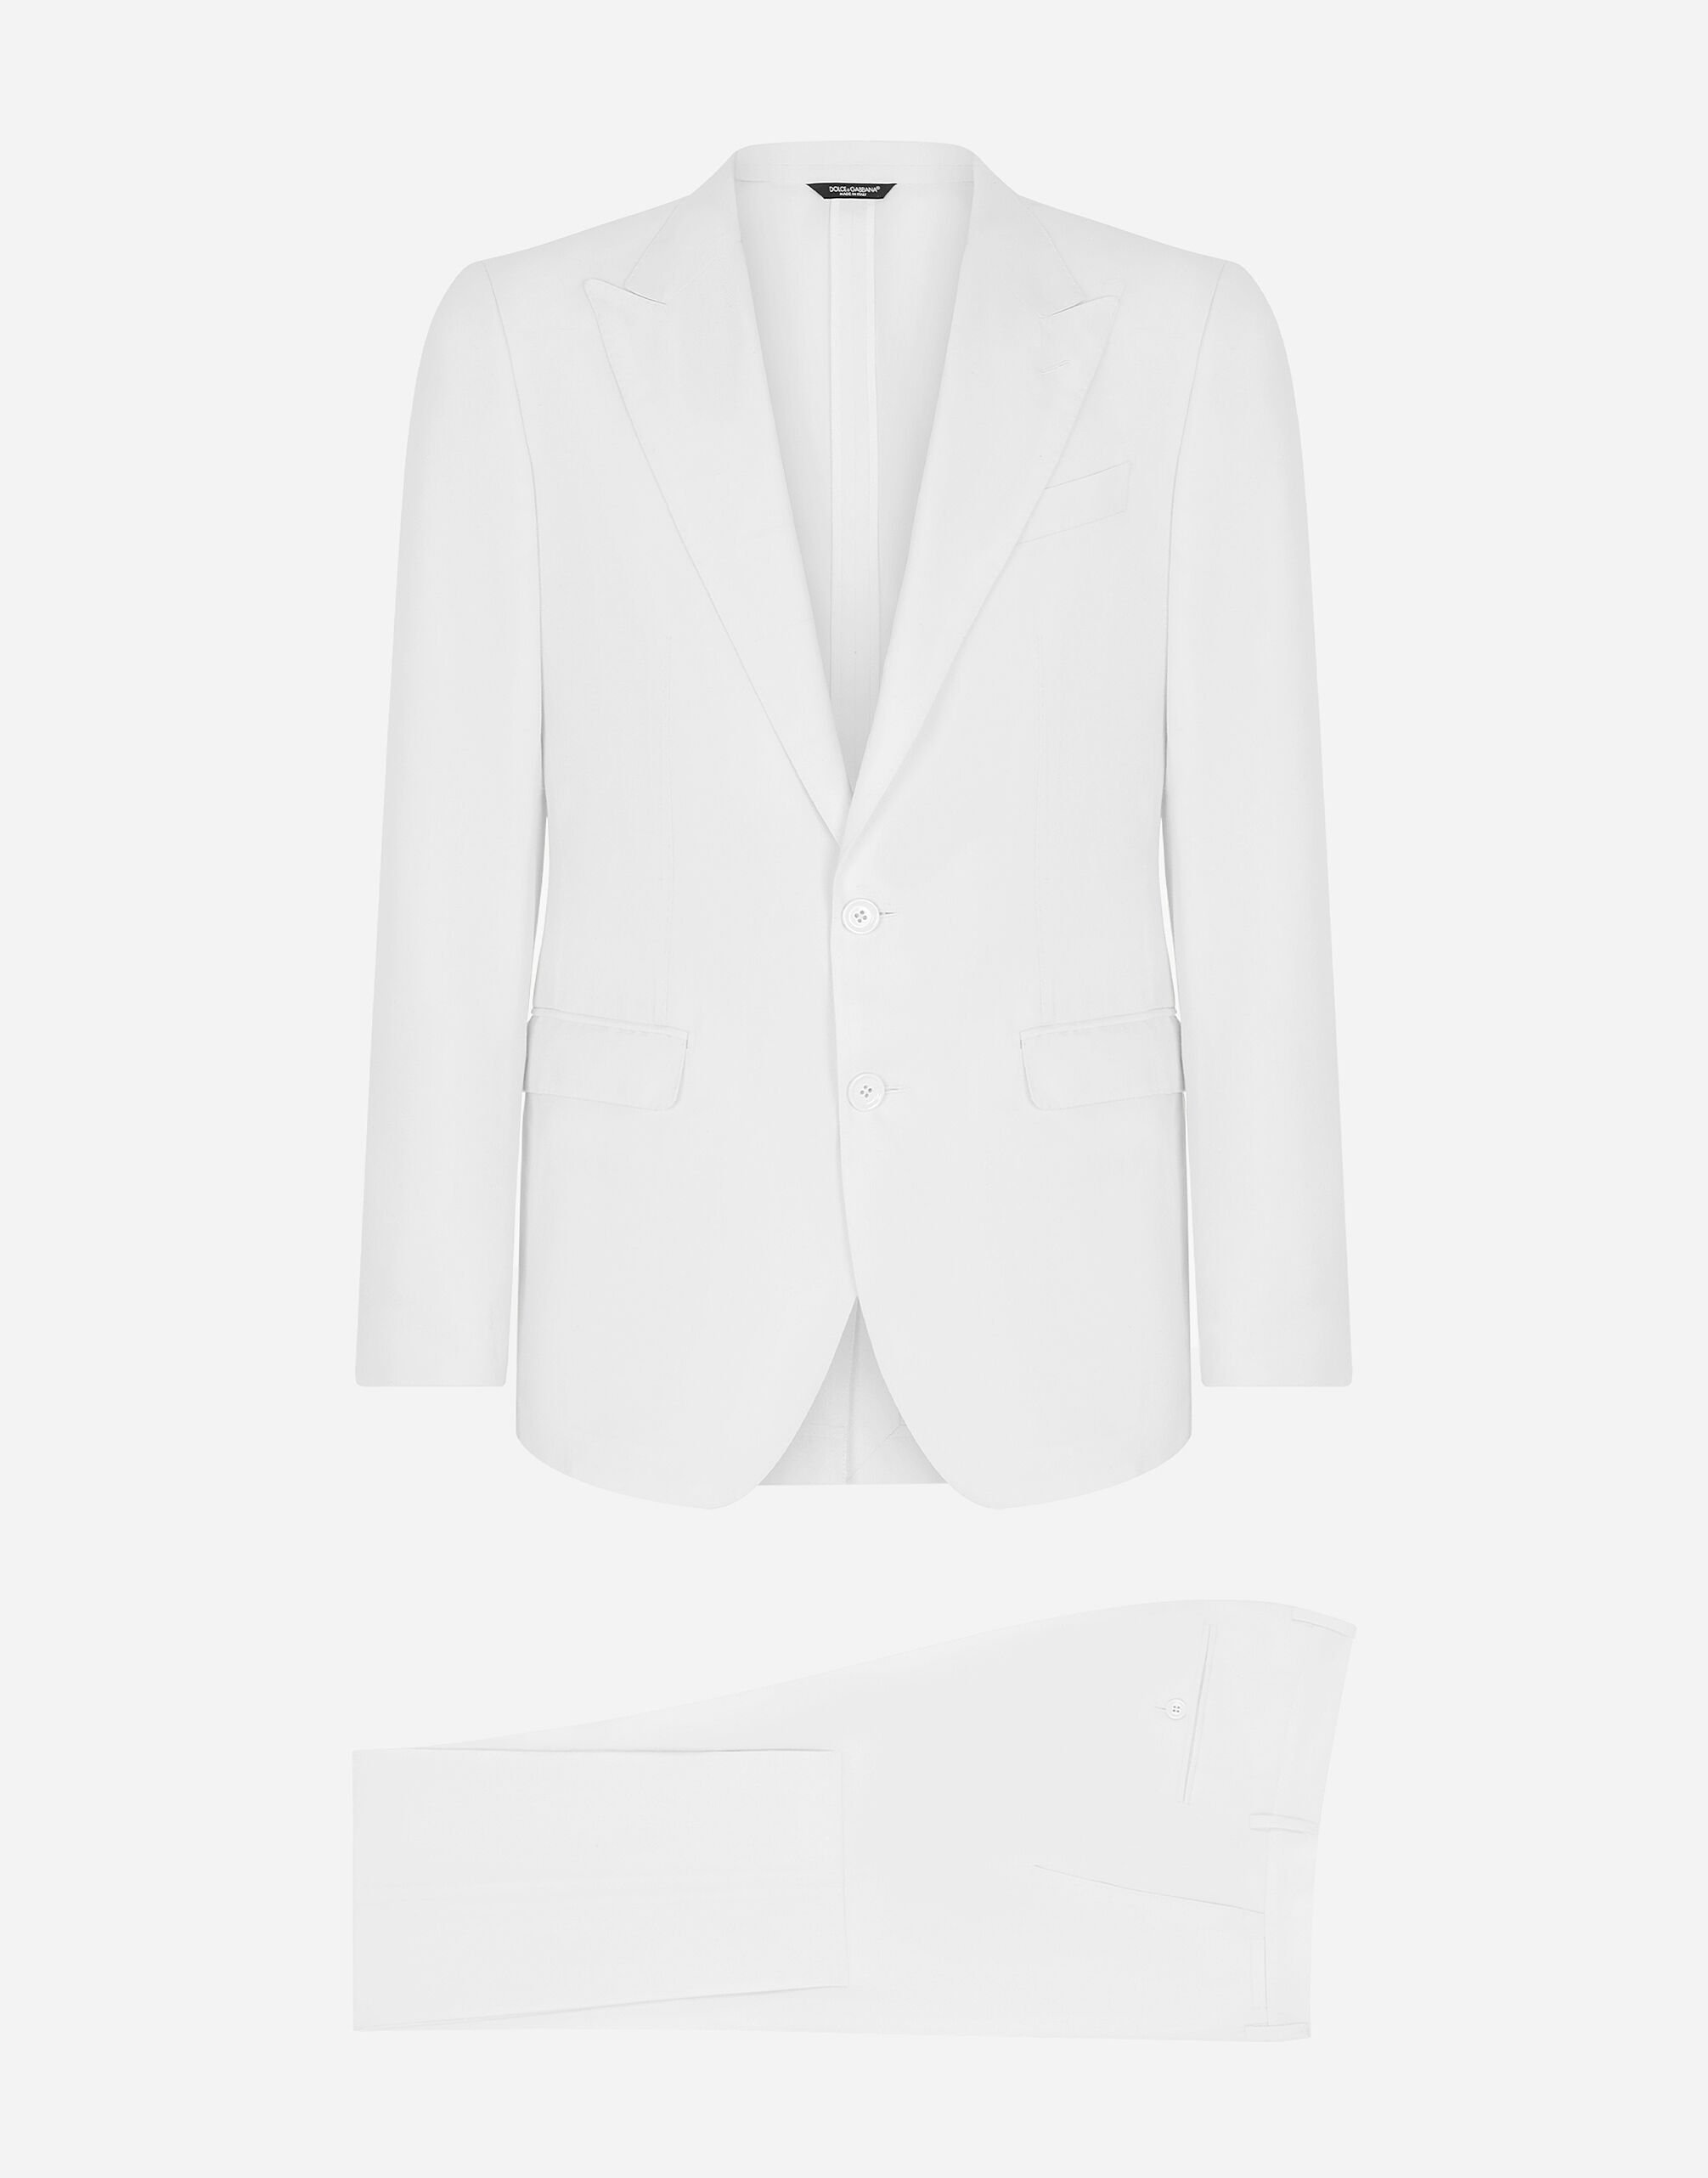 Dolce & Gabbana タオルミーナフィット シングルブレスト スーツ ホワイト GKAHMTFUTBT